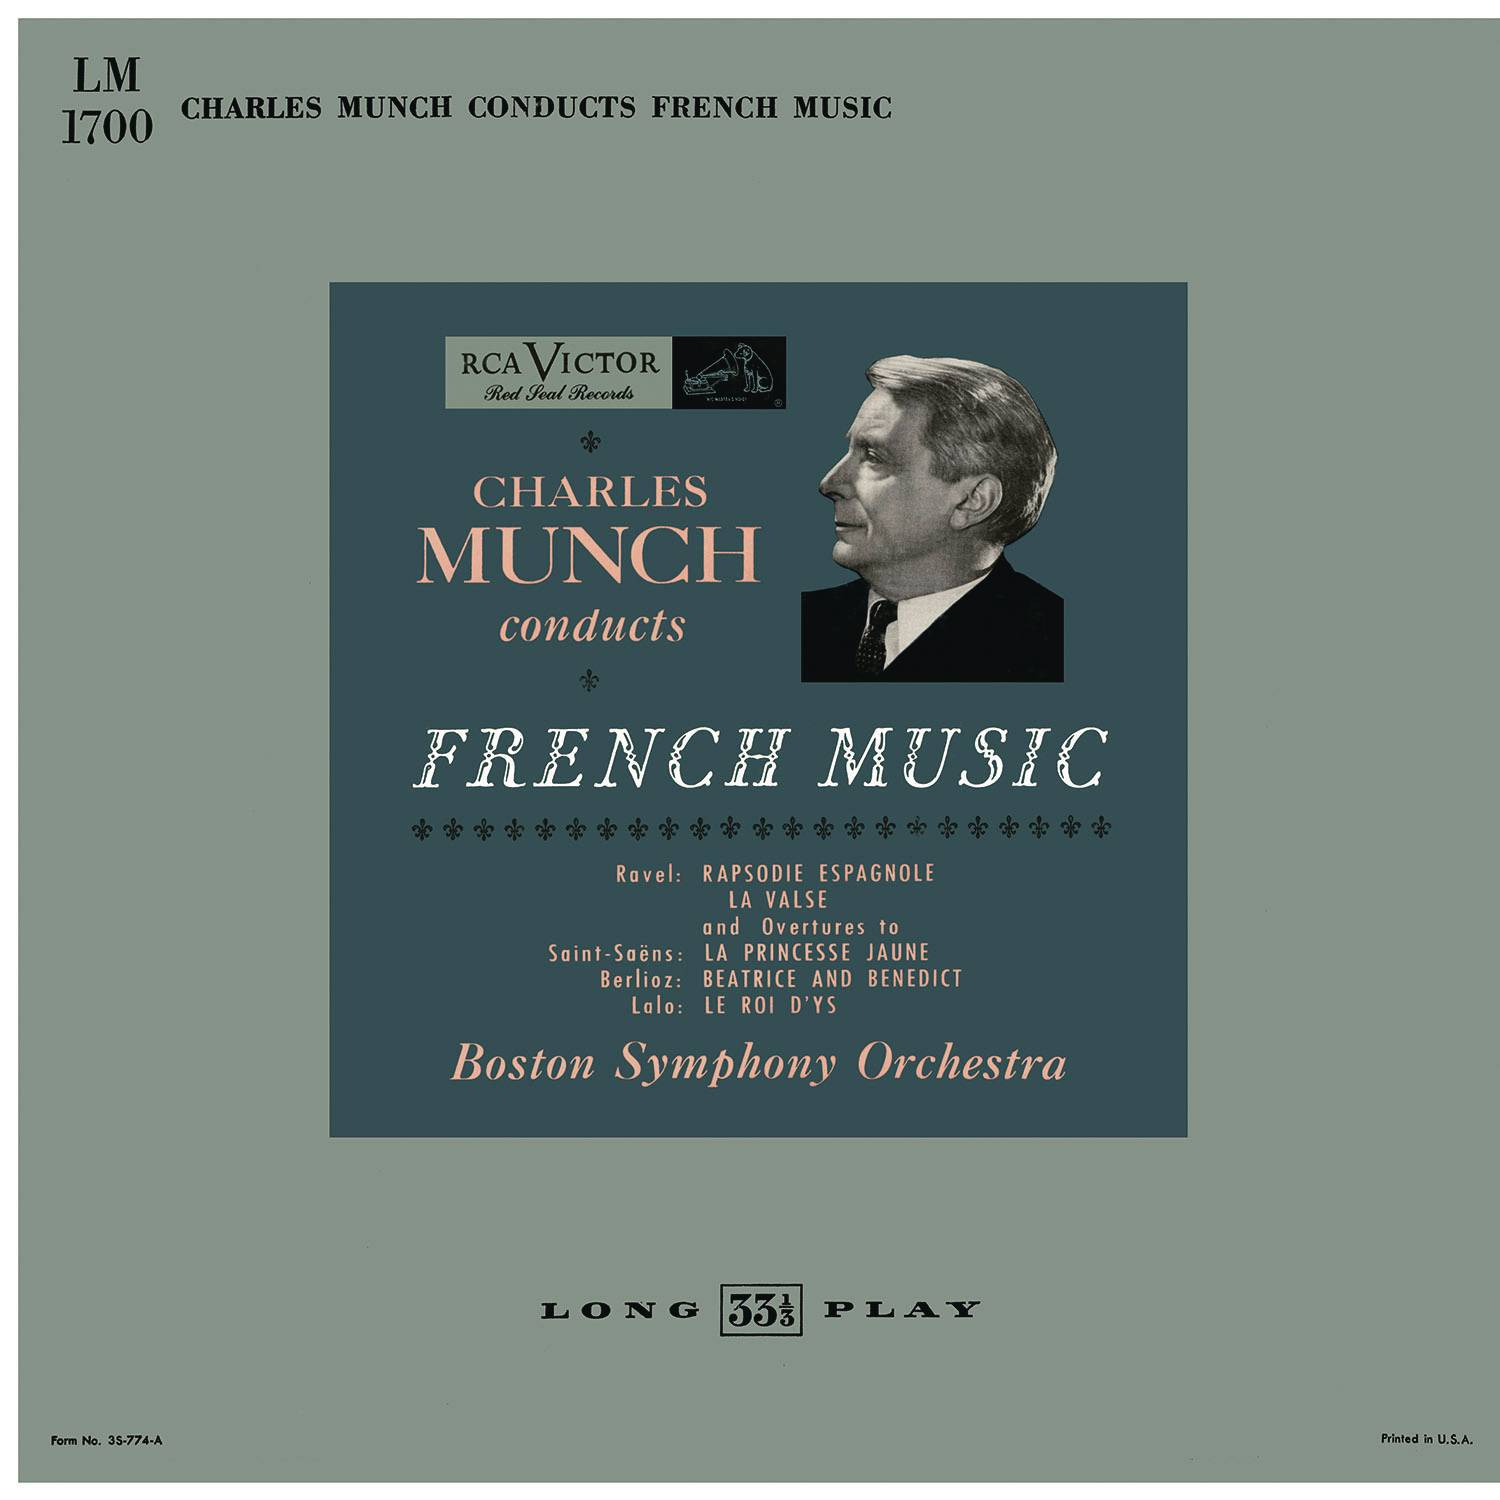 Charles Munch Conducts French Music: Ravel, SaintSa ns, Berlioz and Lalo